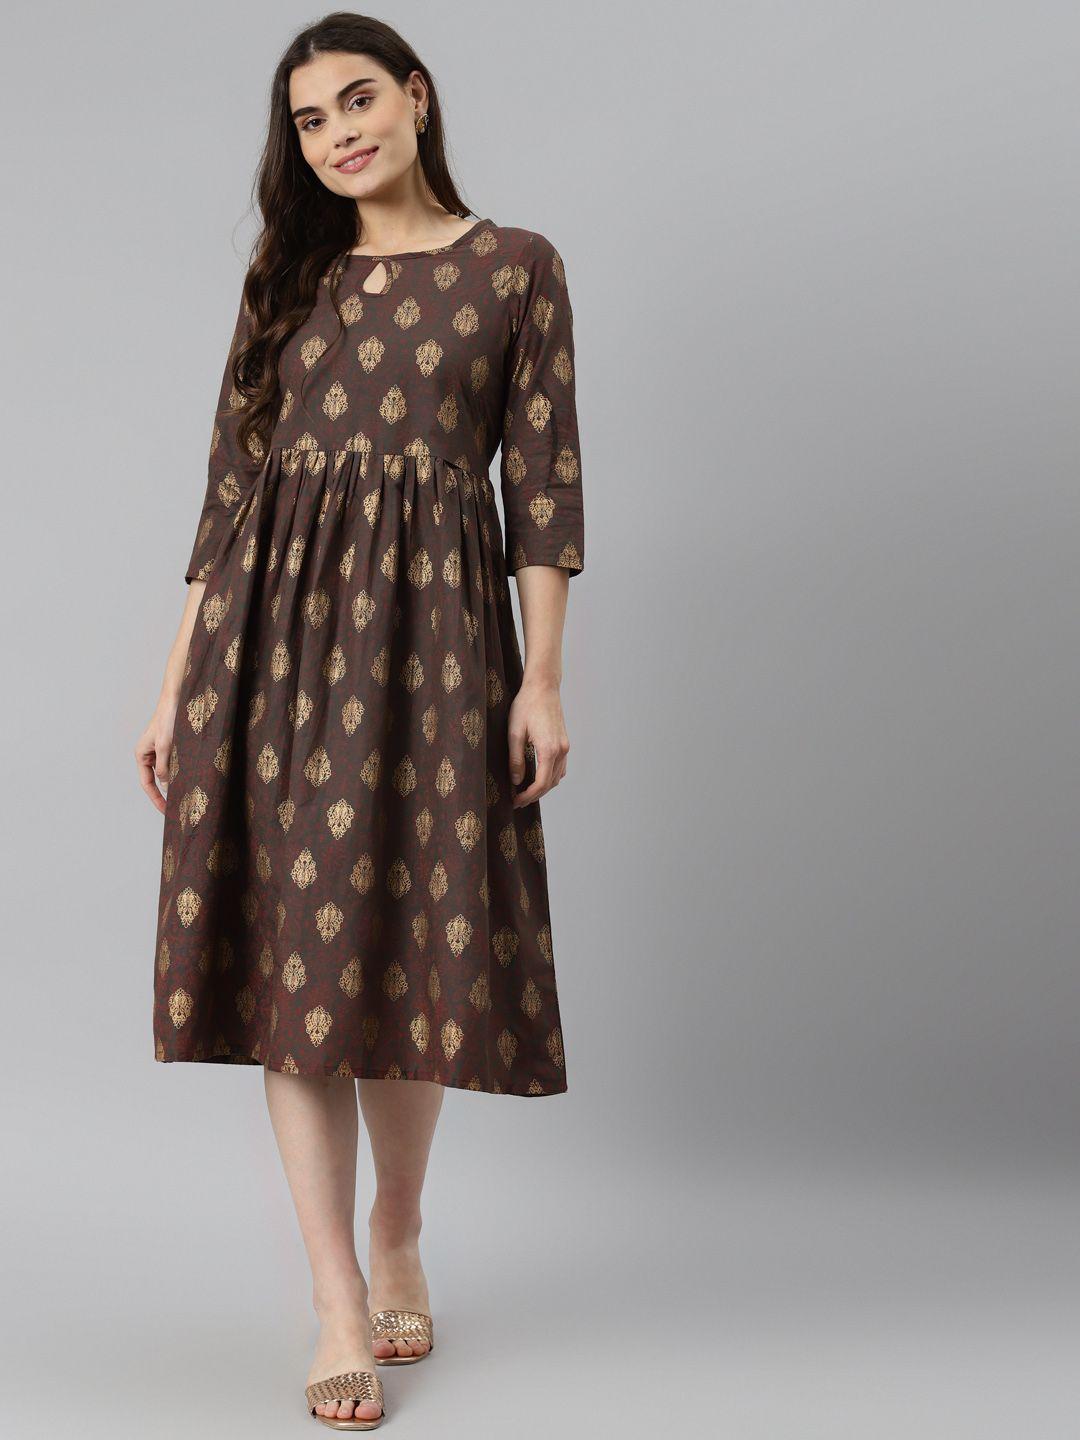 desi beats brown & golden pure cotton ethnic motifs a-line dress